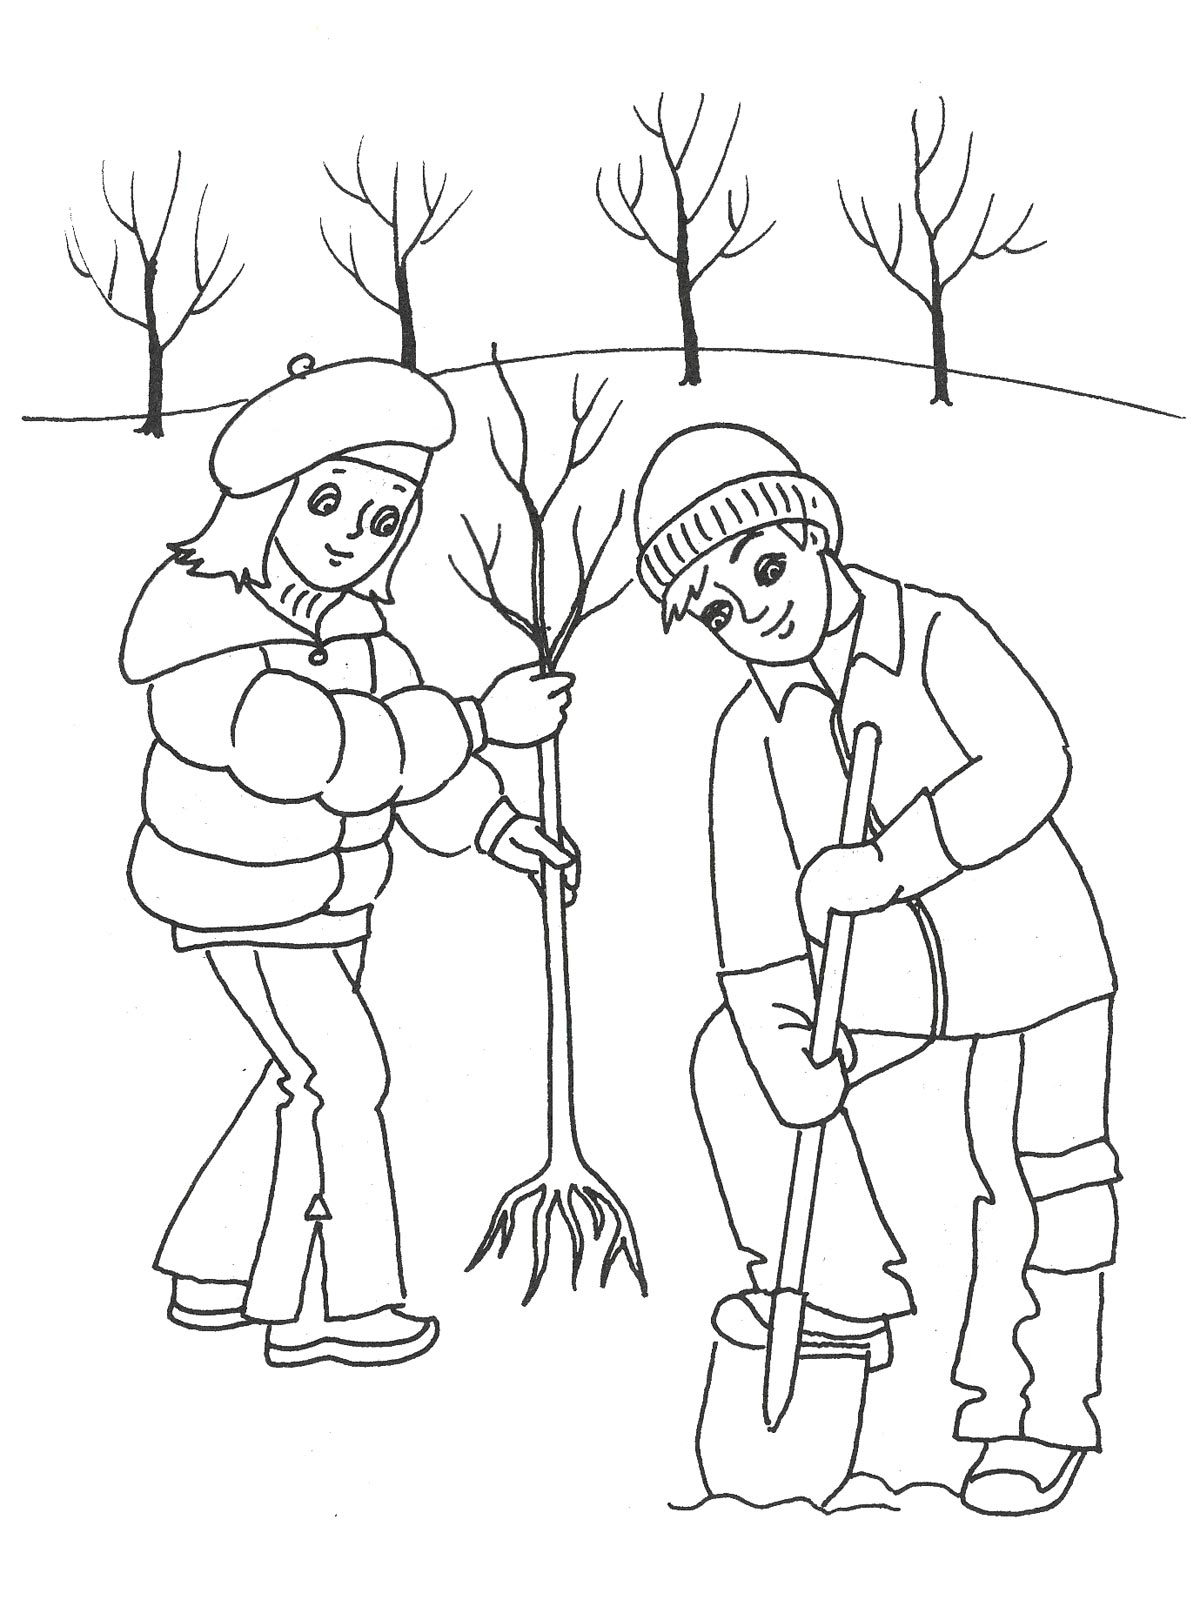 Children plant trees